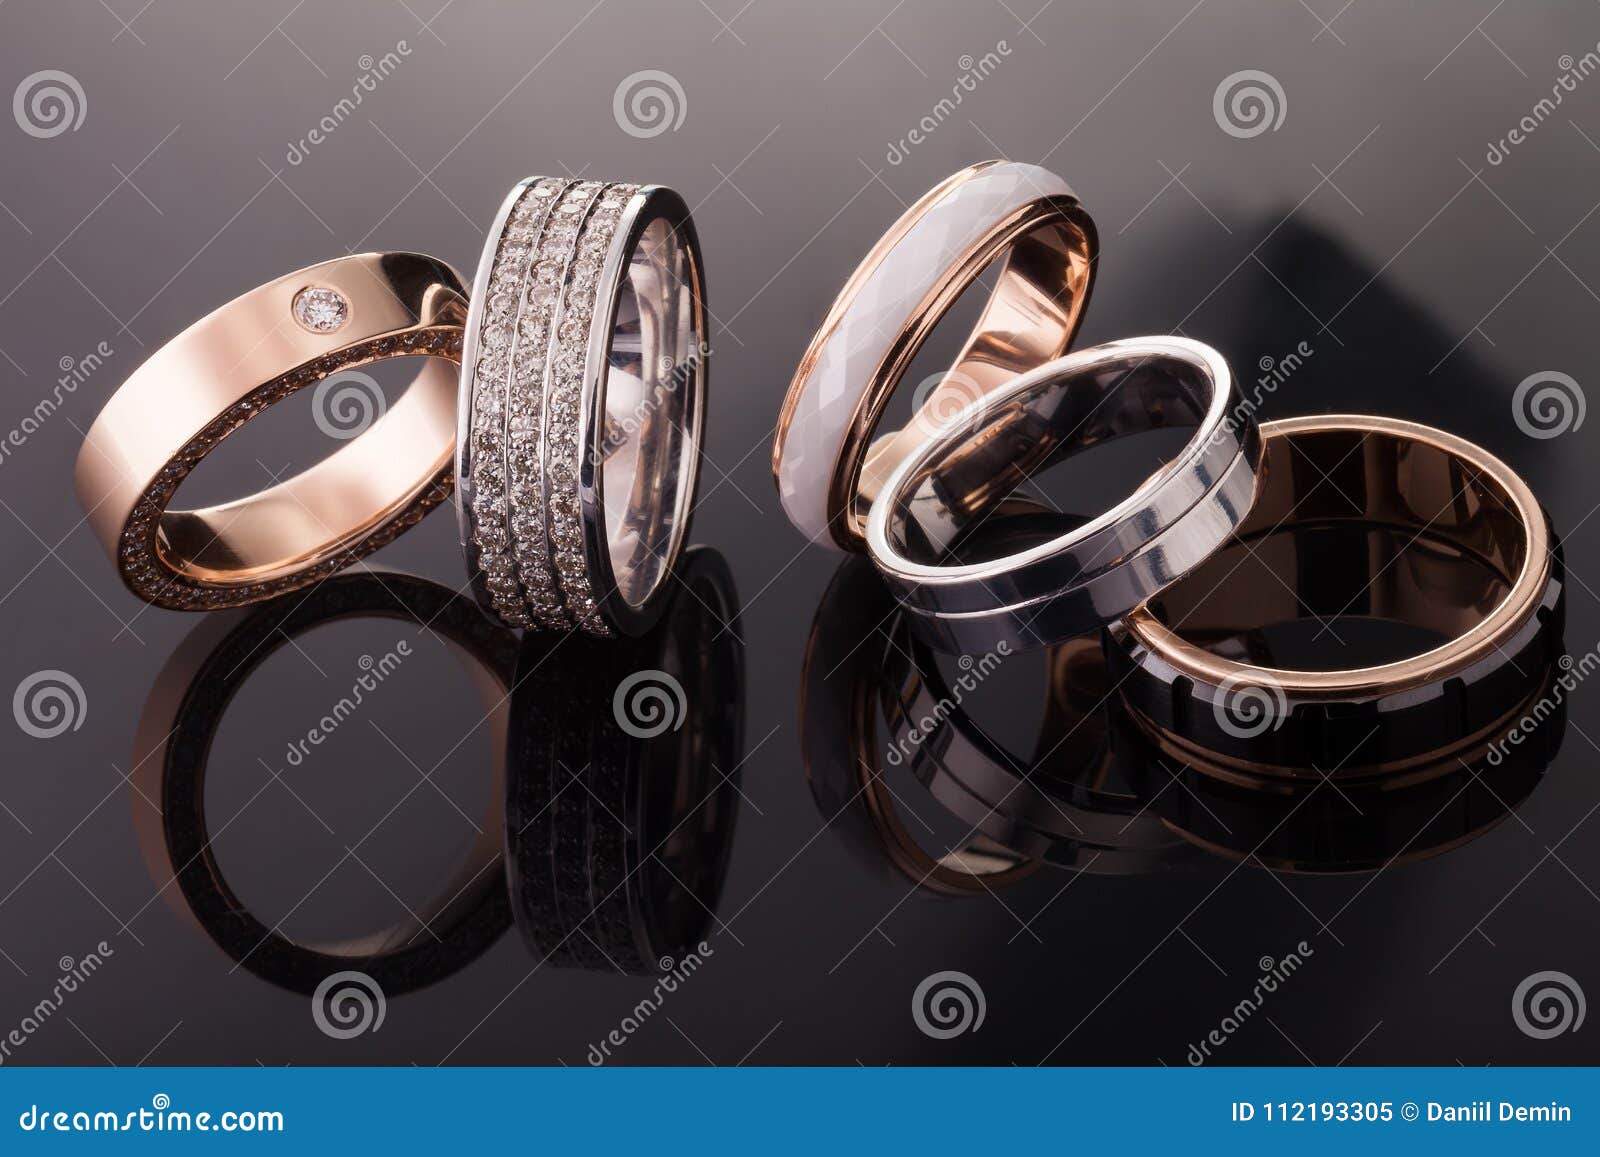 Platinum And Rose Gold Two Tone Wedding Rings at 83430.00 INR in Mumbai |  Ss Platinum